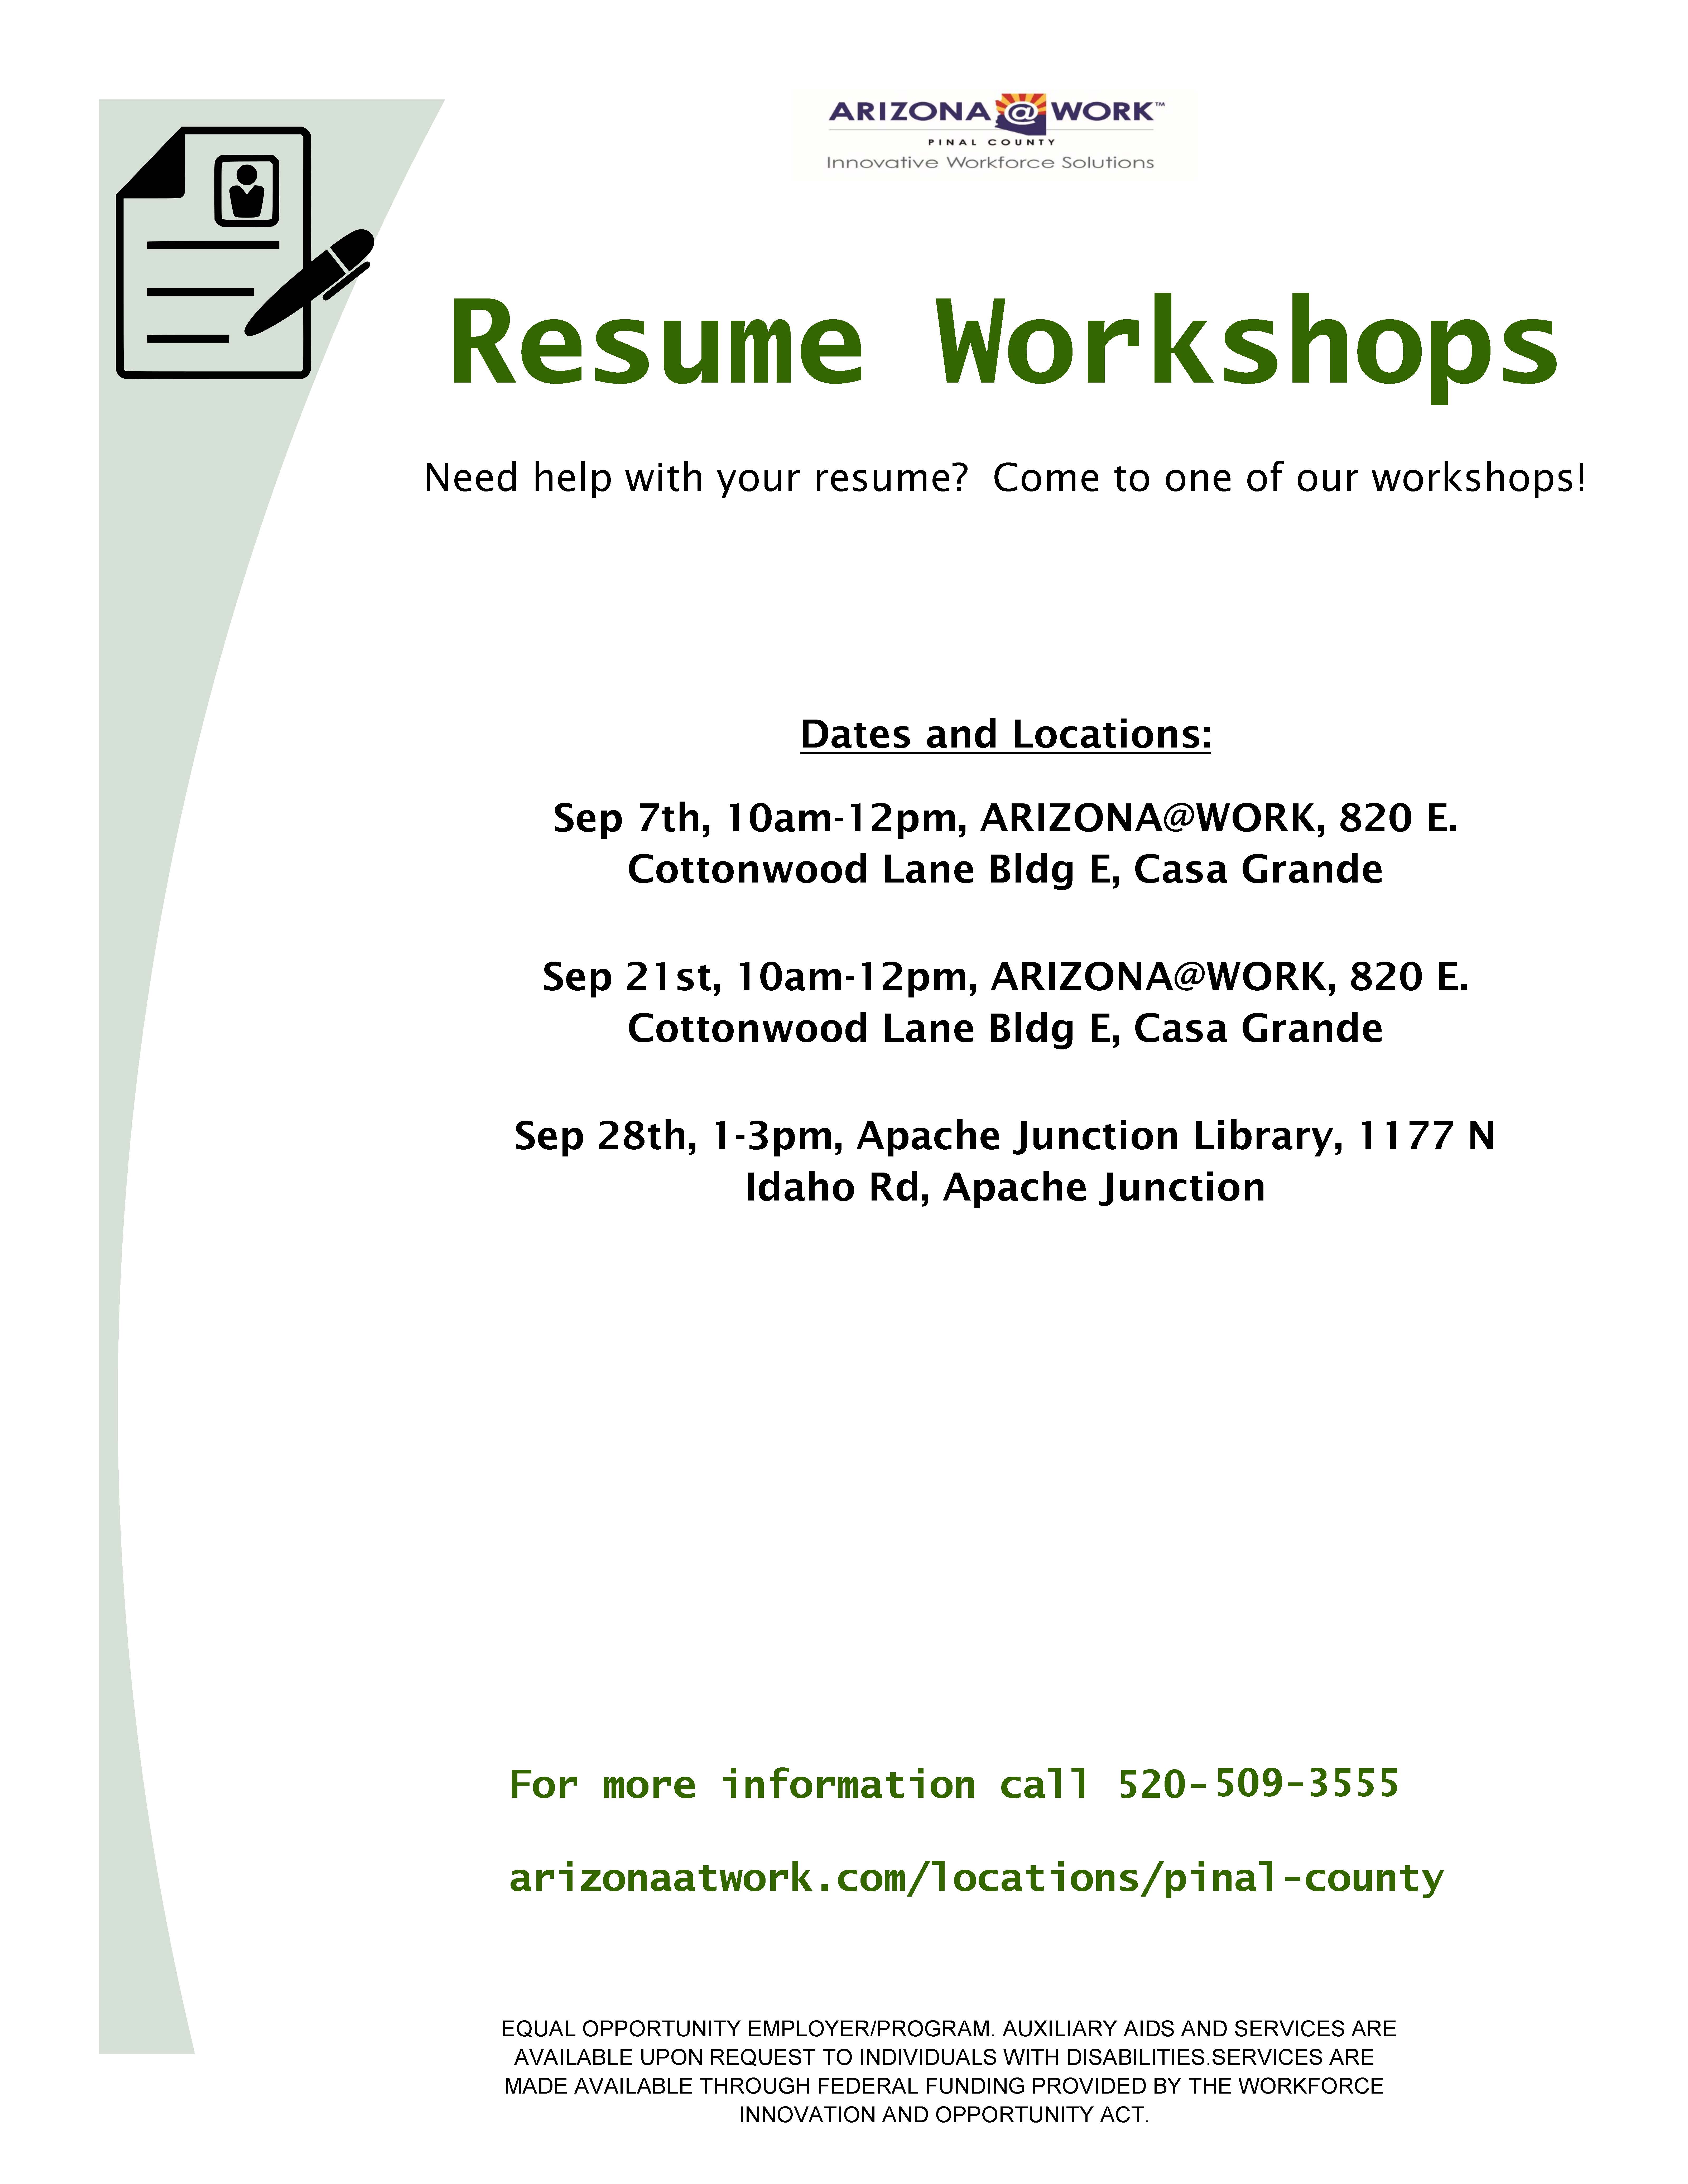 Resume Workshop Flyer.jpg